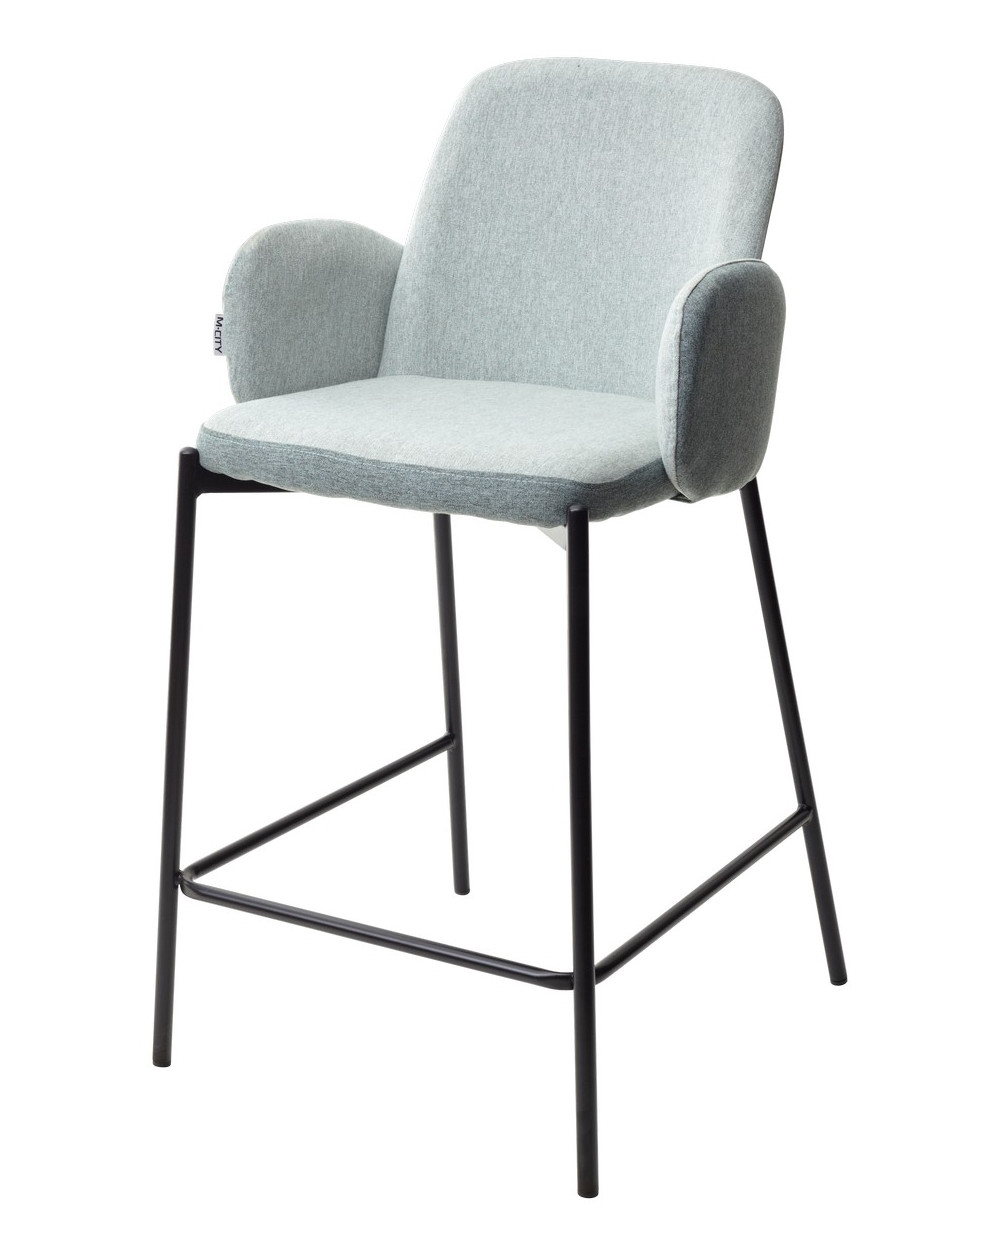 Полубарный стул NYX (H65cm) VF113 светлая мята/VF115 серо-зеленый фото Stolmag